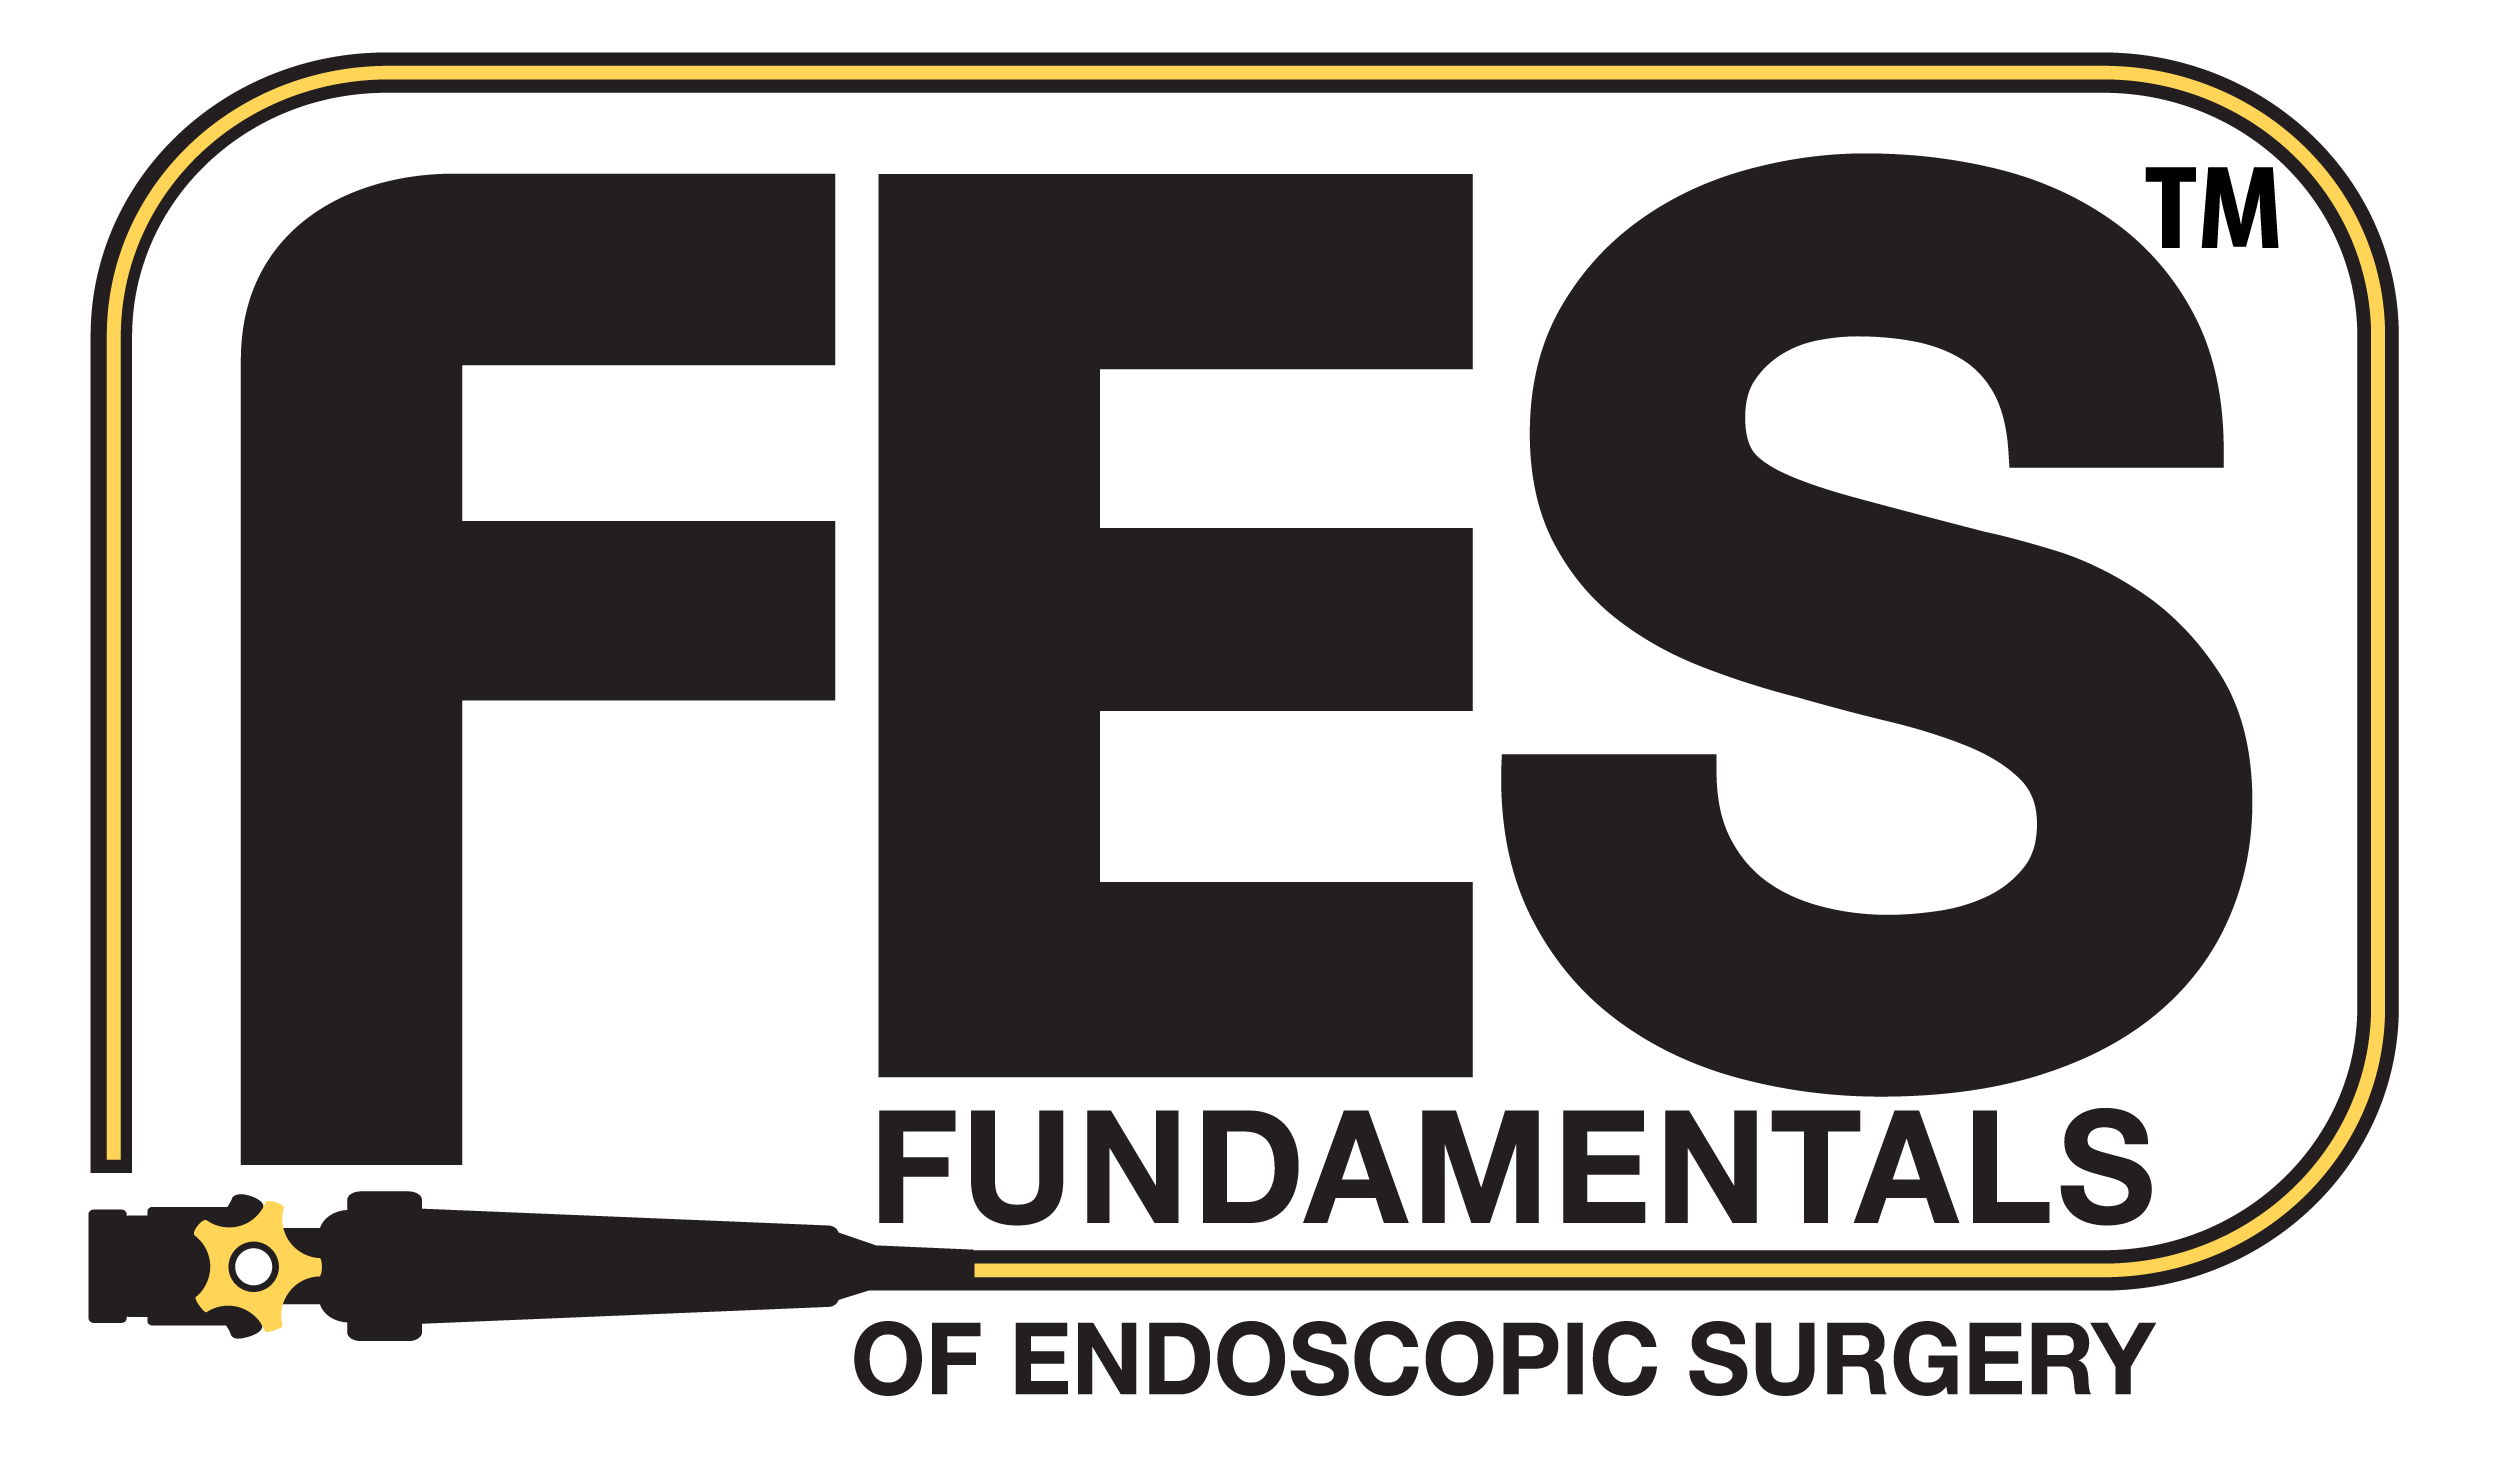 Fundamentals of Endoscopic Surgery